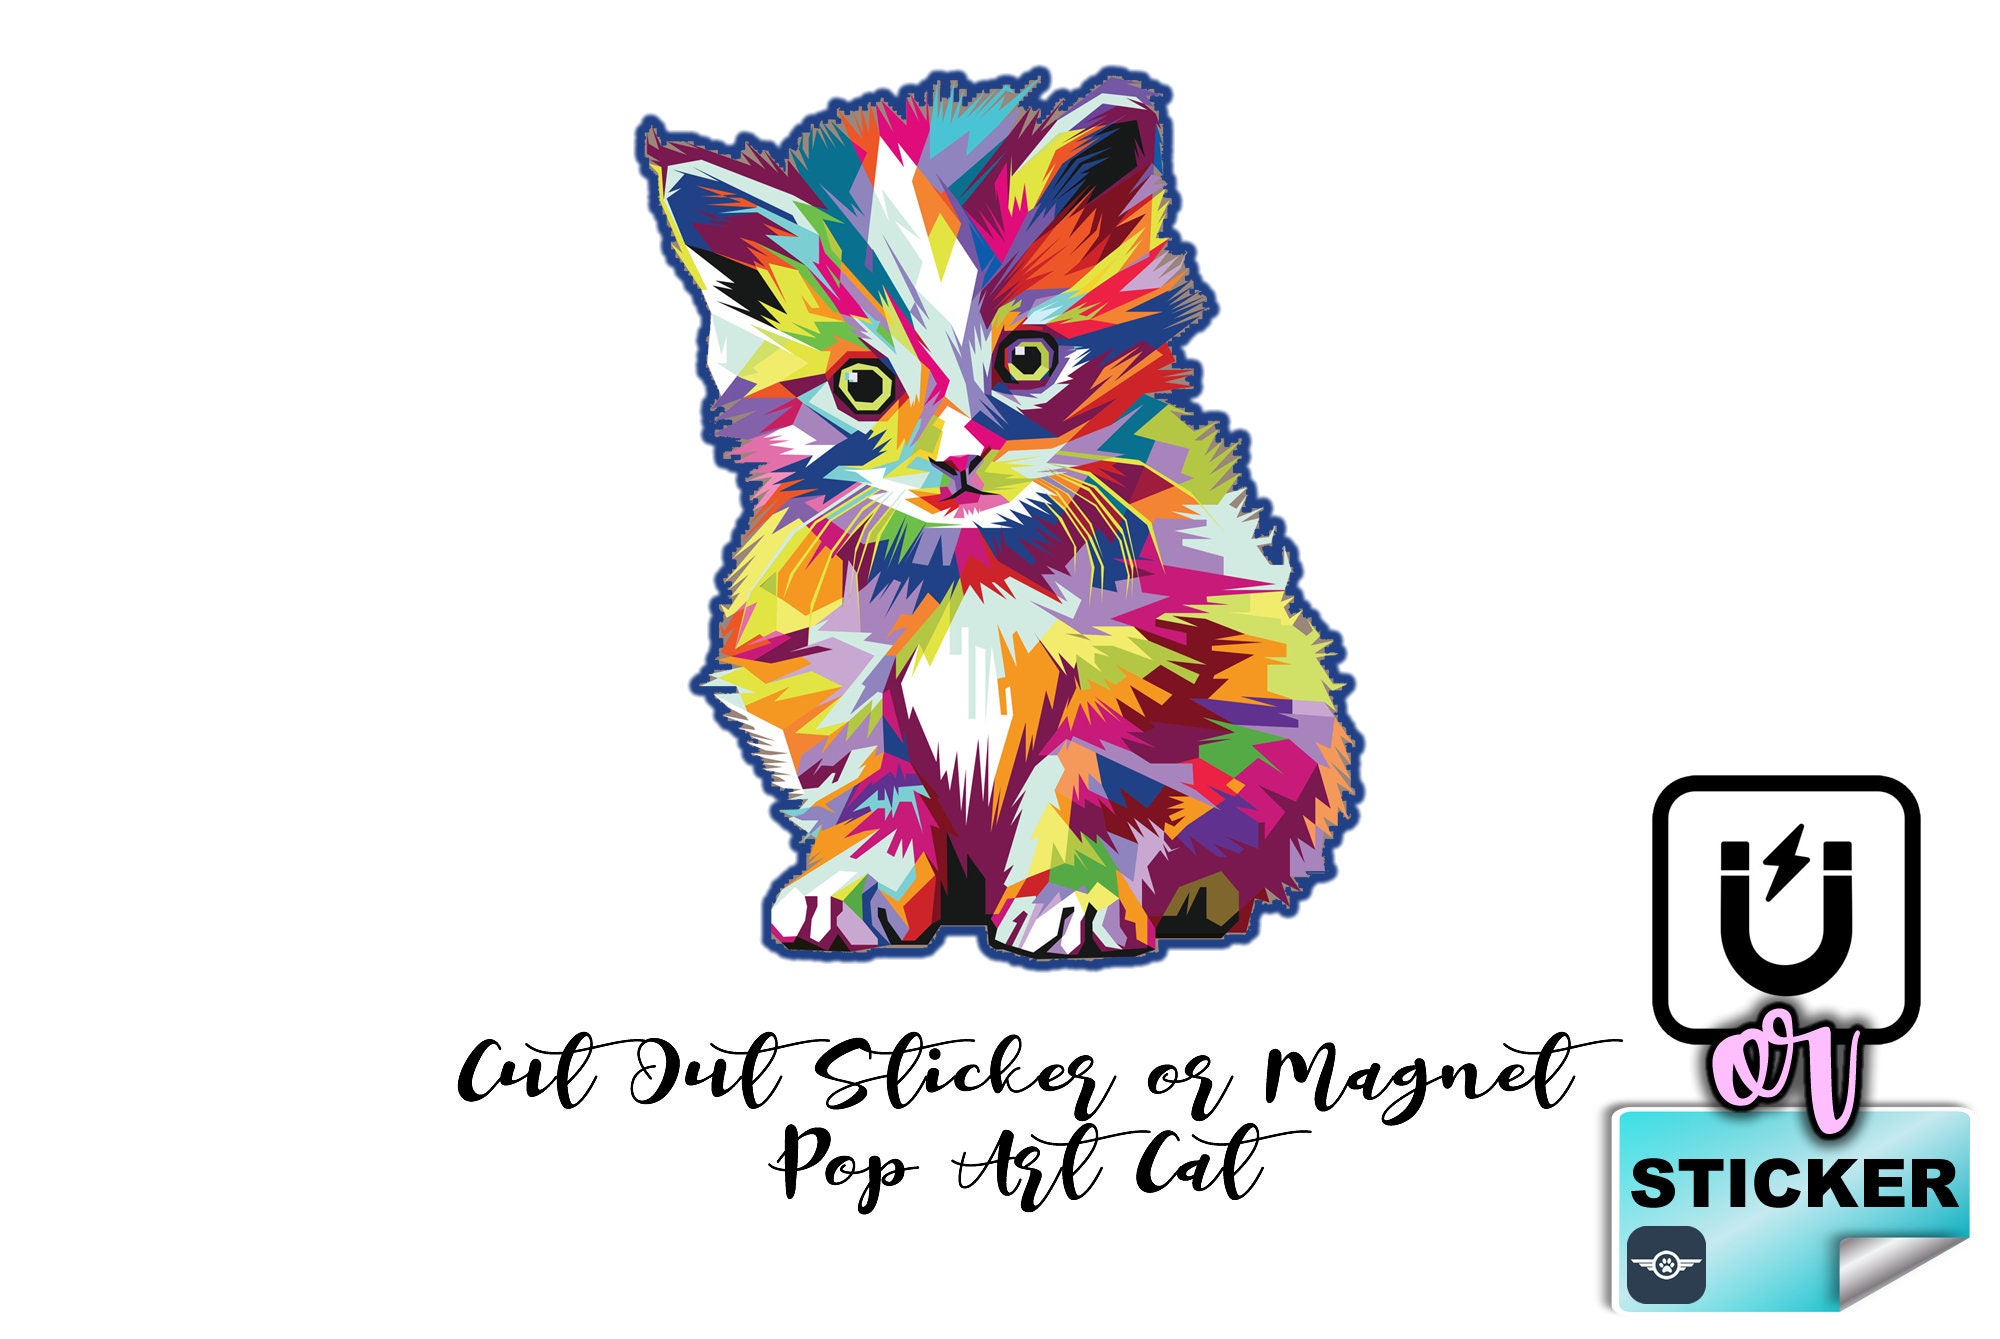 Die Cut Pop Art Cat sticker or magnet in various wide, vinyl OR standard sticker,